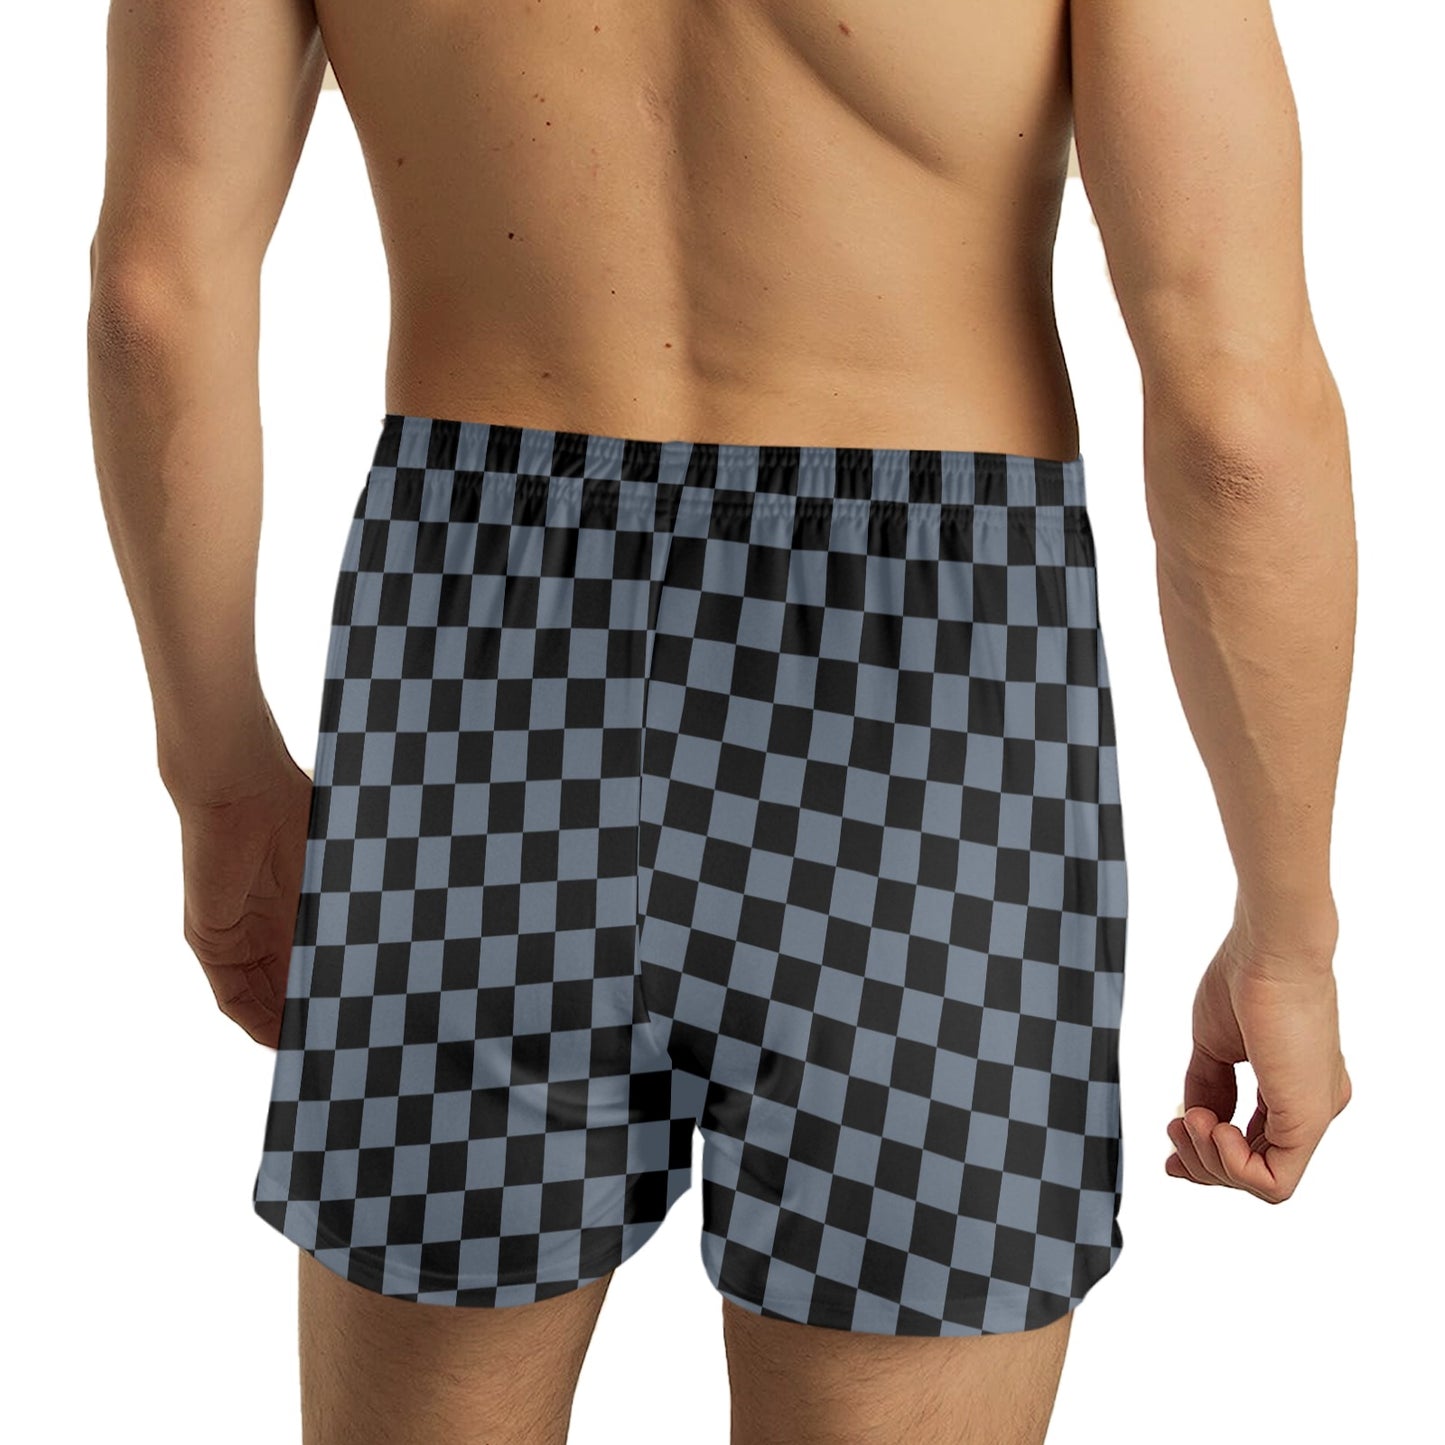 Grey Black Checkered Men Pajama Shorts, Check Short Sleep Lounge PJ Bottoms Sleepwear Boxer Shorts Male Guys Pyjamas Soft